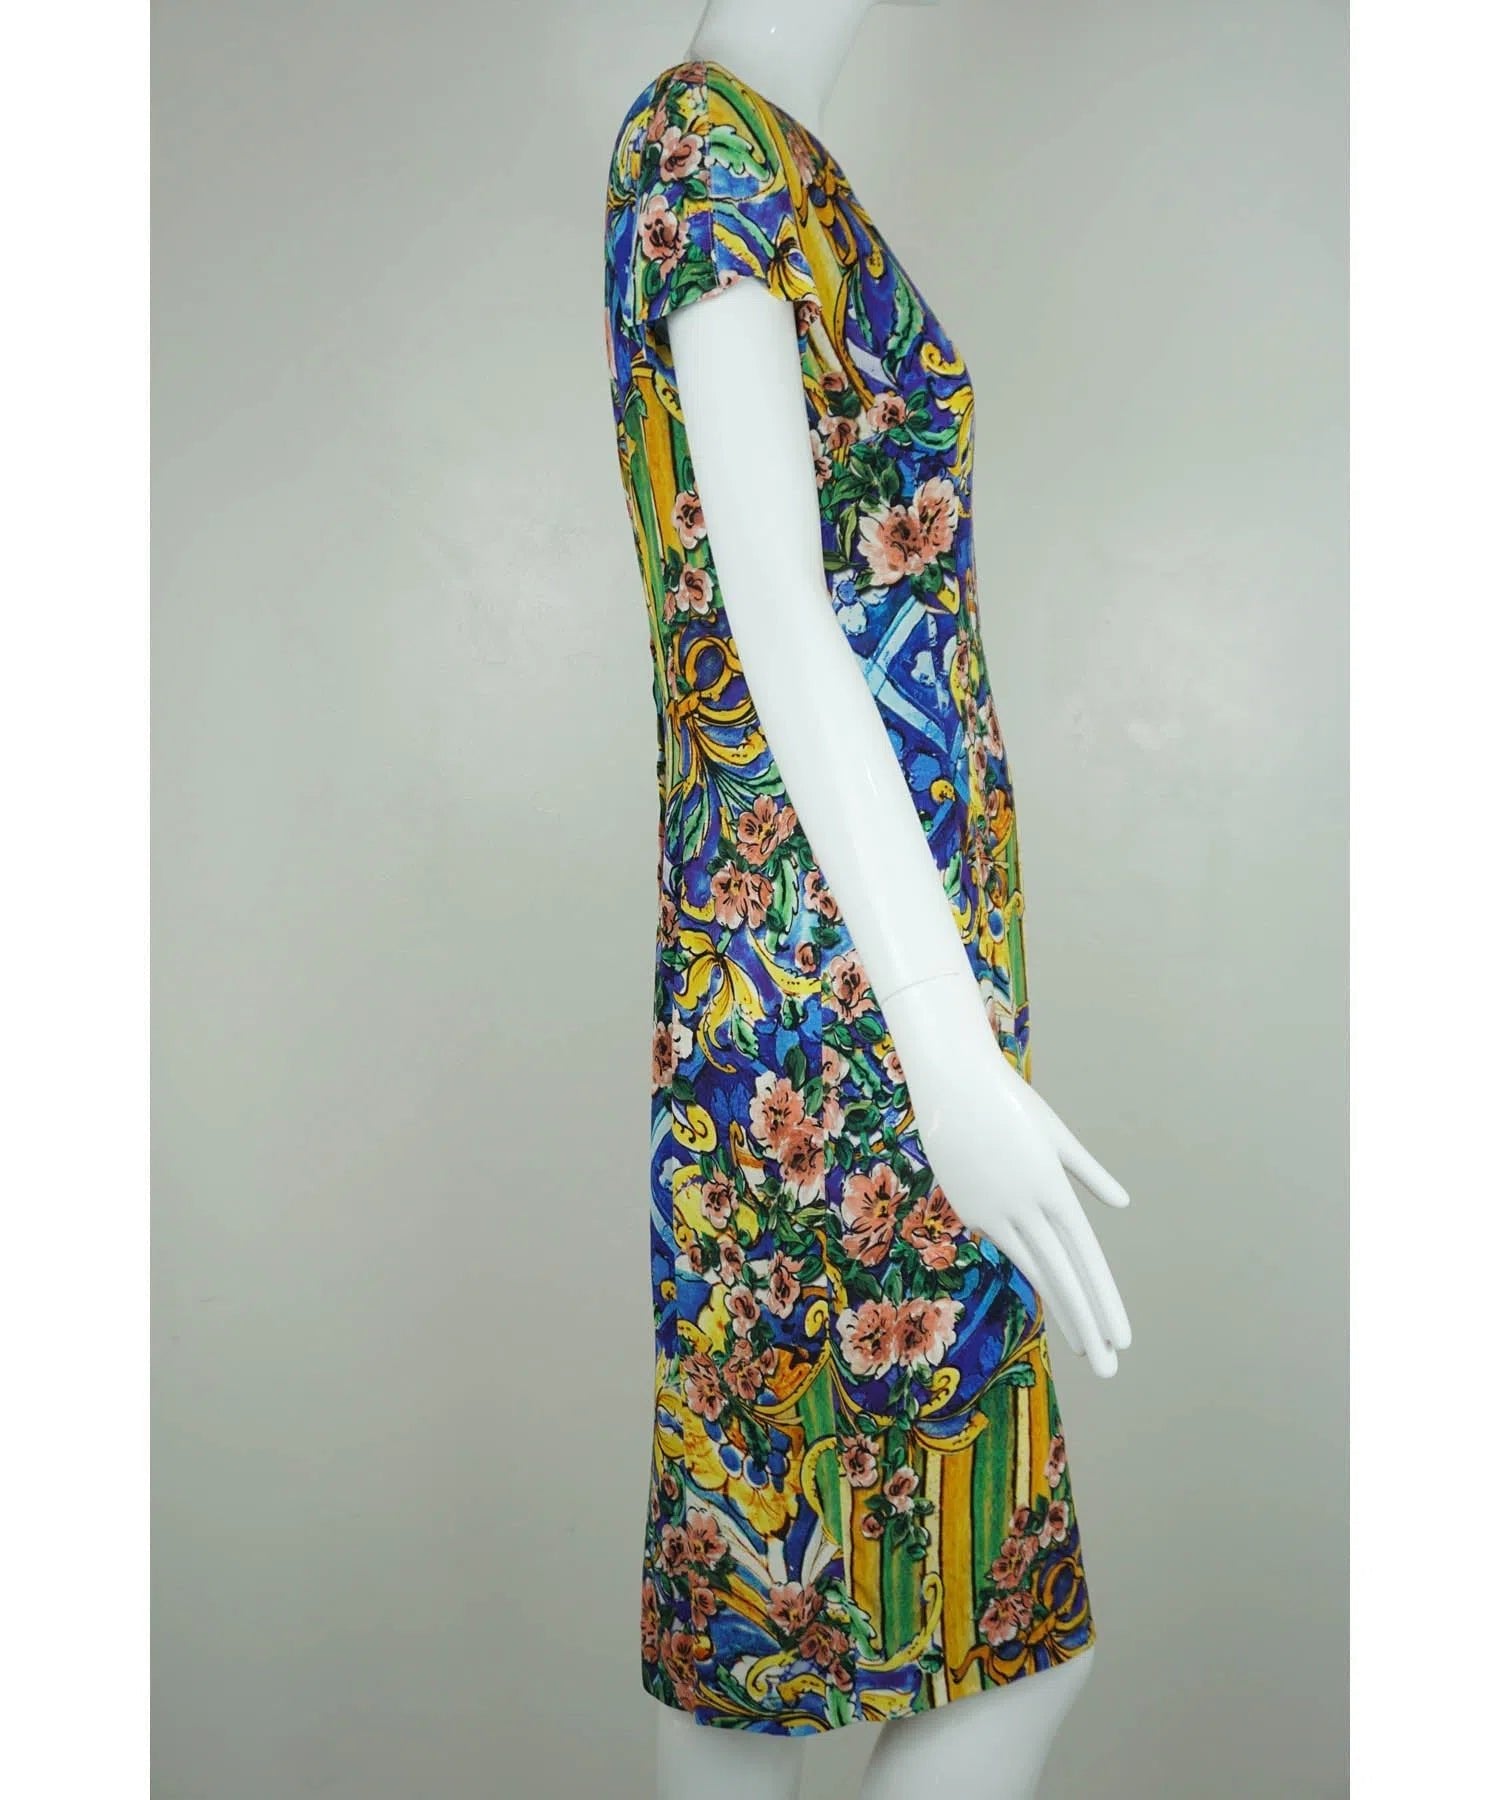 Dolce & Gabbana Blue and Yellow Sicilian Crepe Dress Sz 44/8